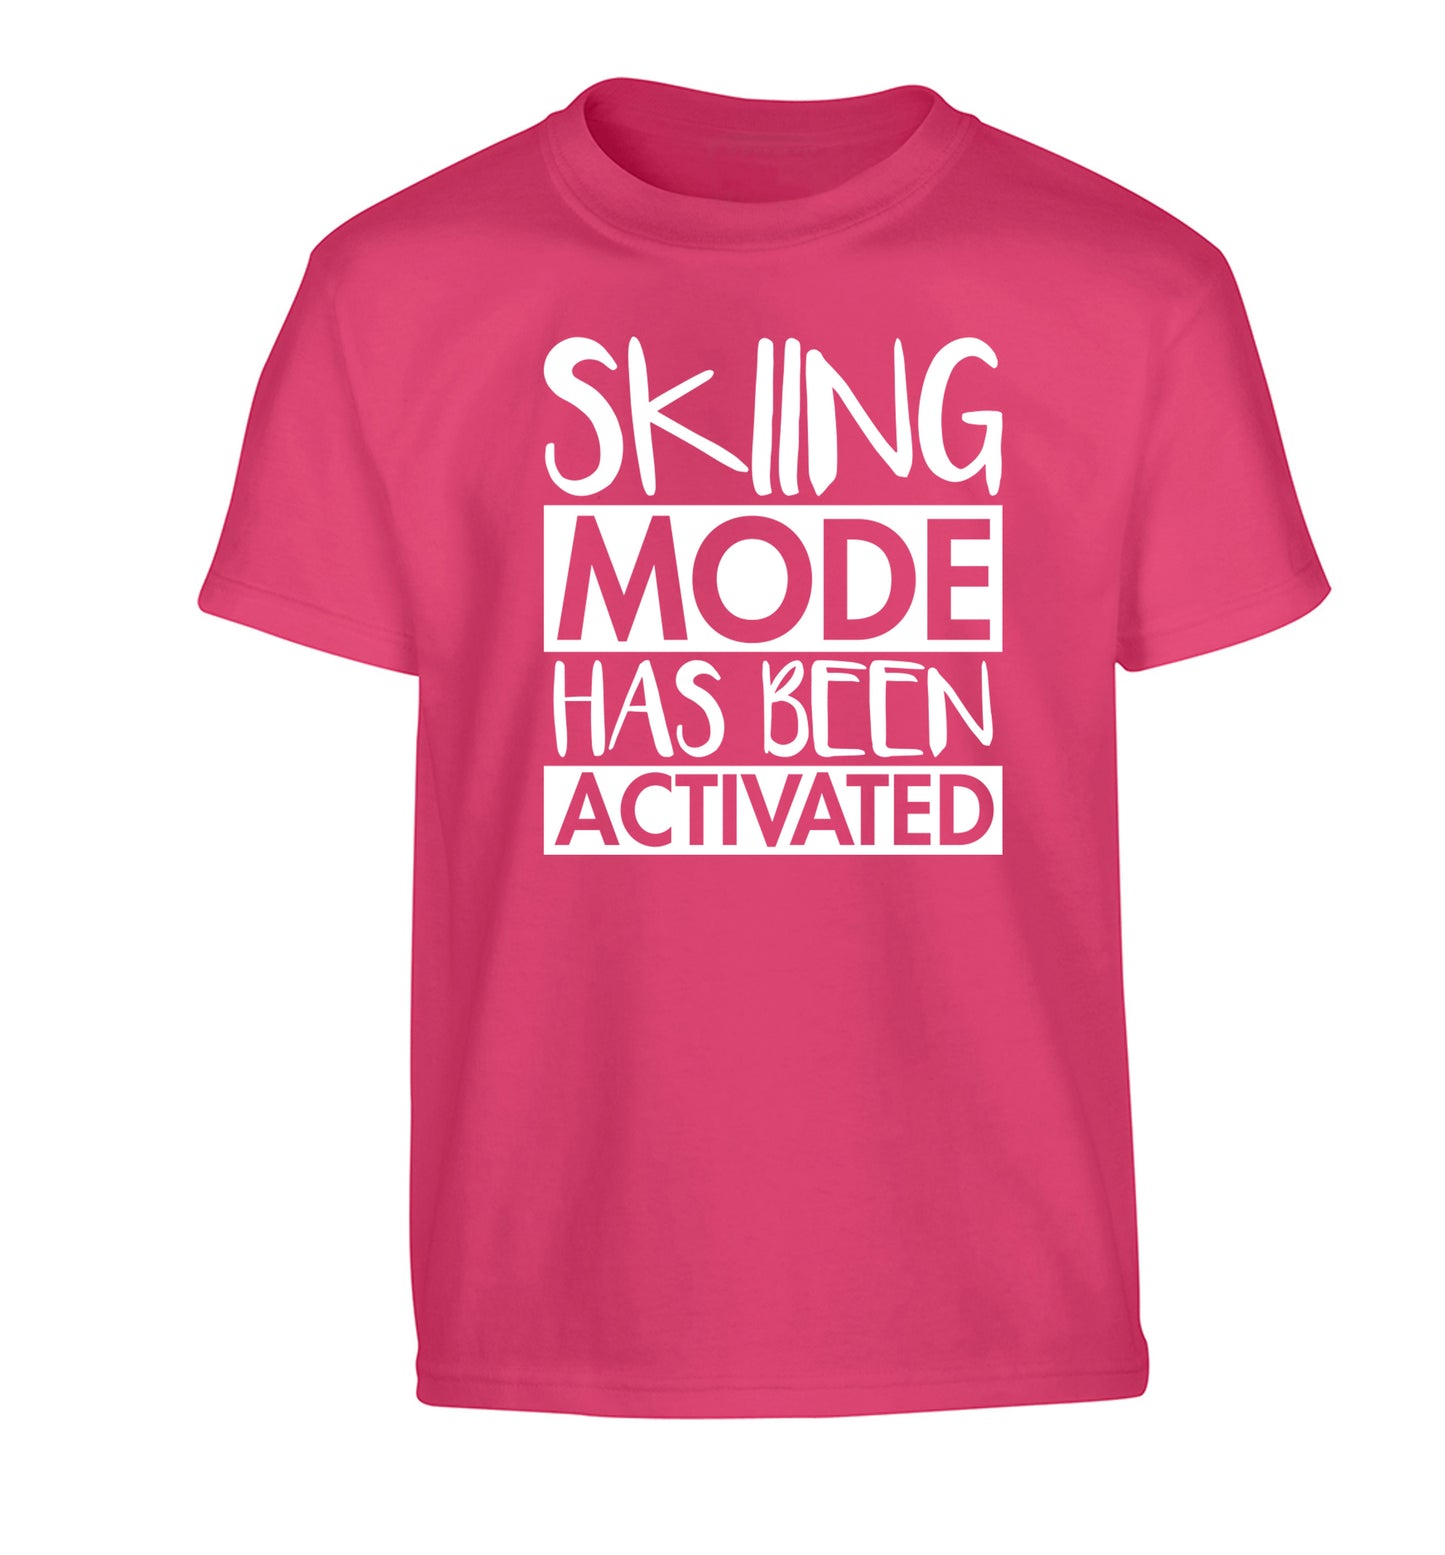 Skiing mode activated Children's pink Tshirt 12-14 Years